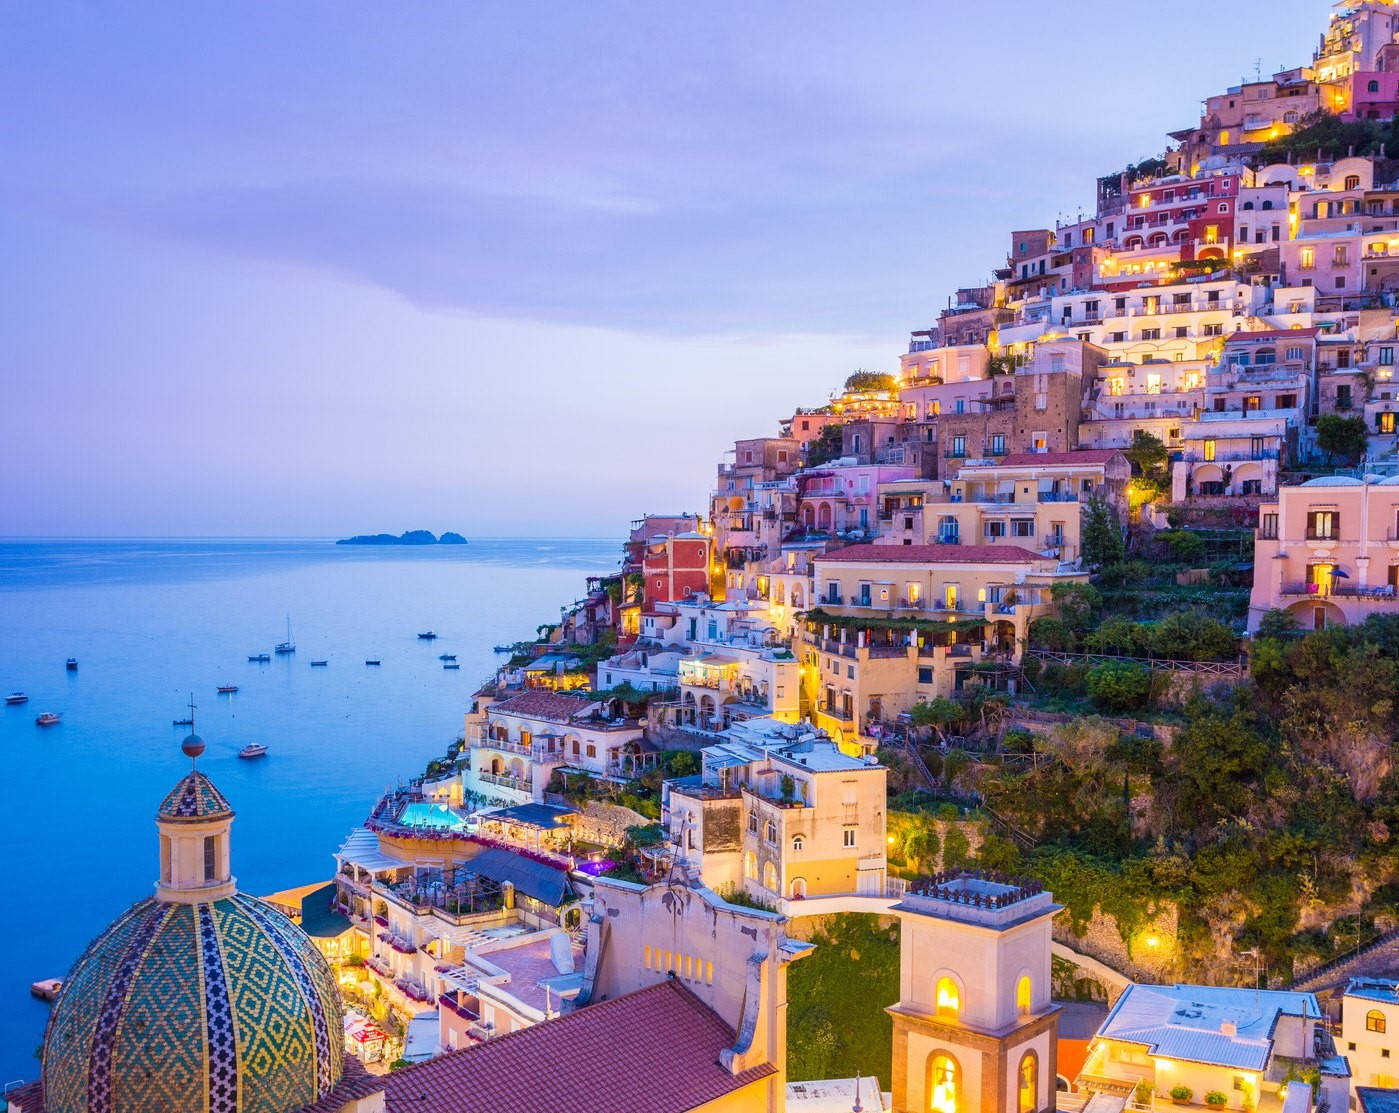 Naplespositano Amalfi Coast City Light - Luz De La Ciudad De La Costa Amalfitana En Nápoles Positano Fondo de pantalla